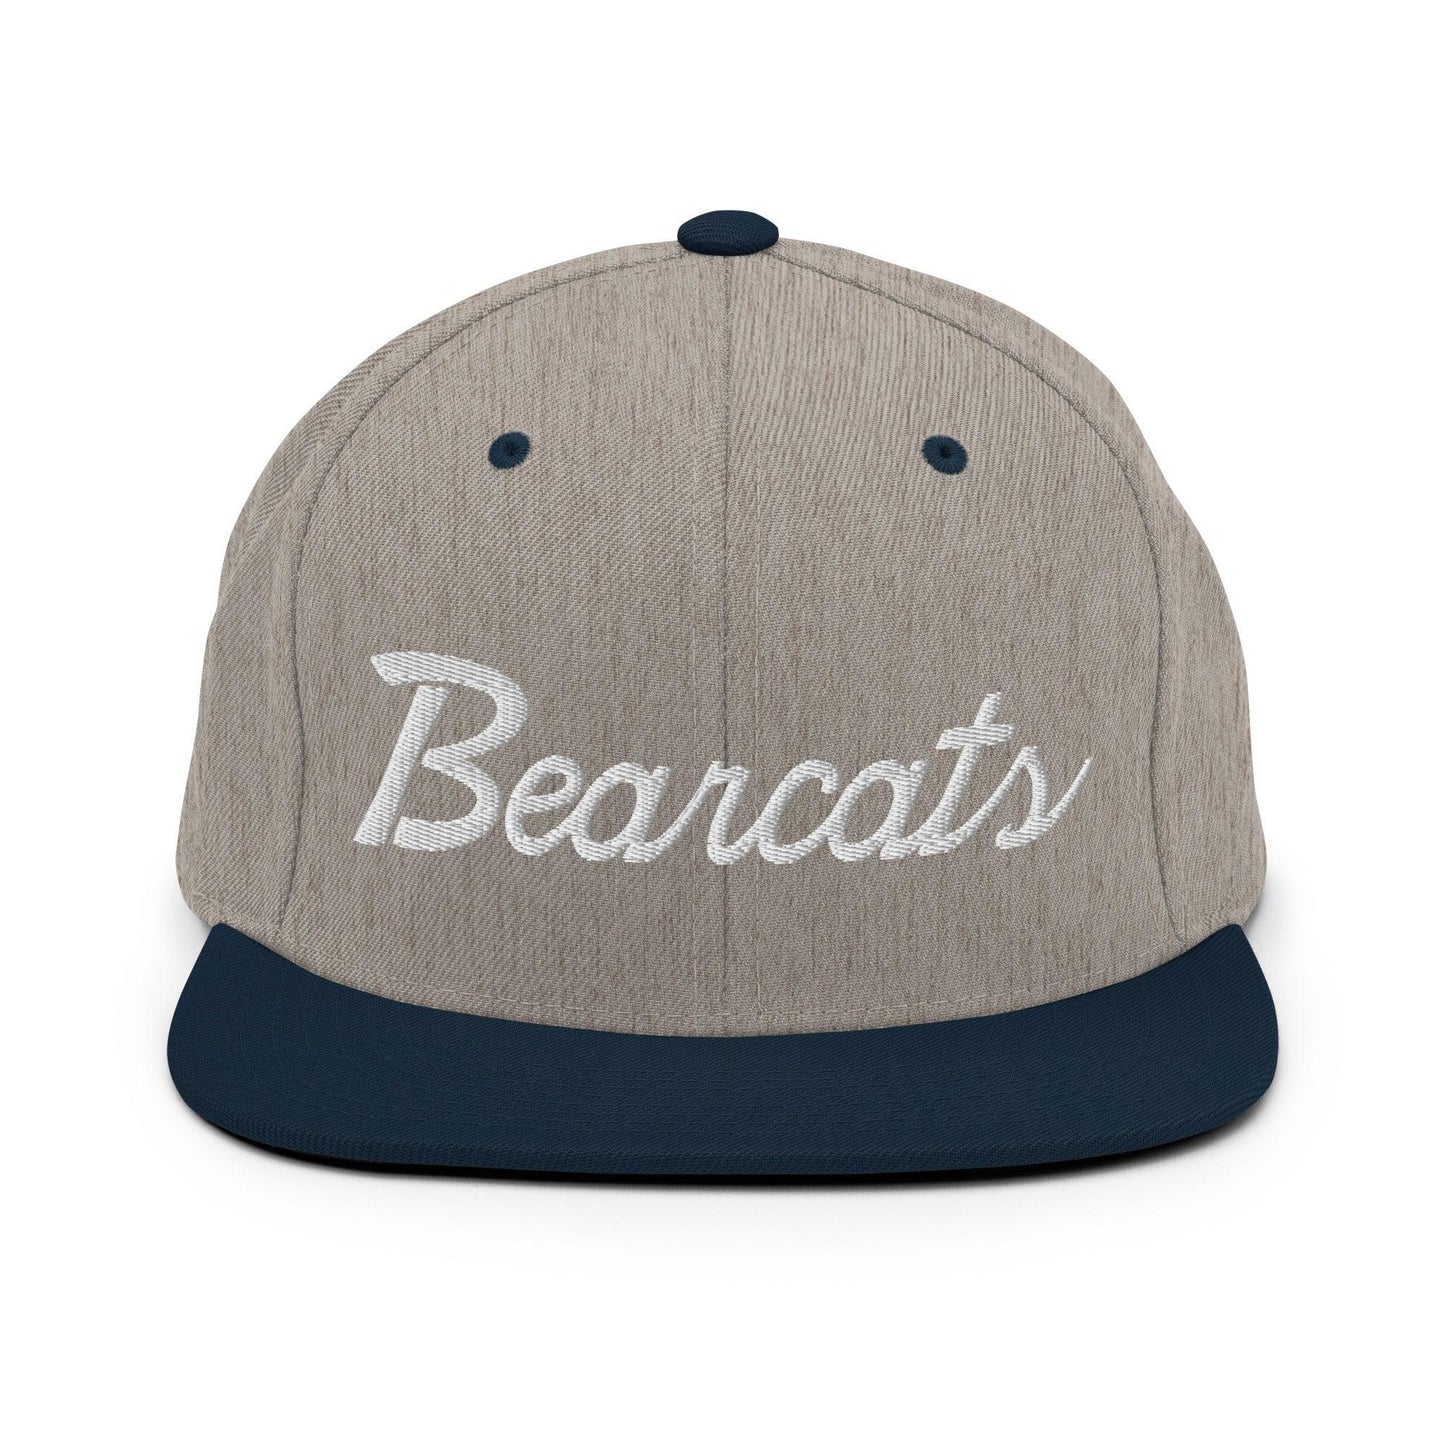 Bearcats School Mascot Script Snapback Hat Heather Grey Navy